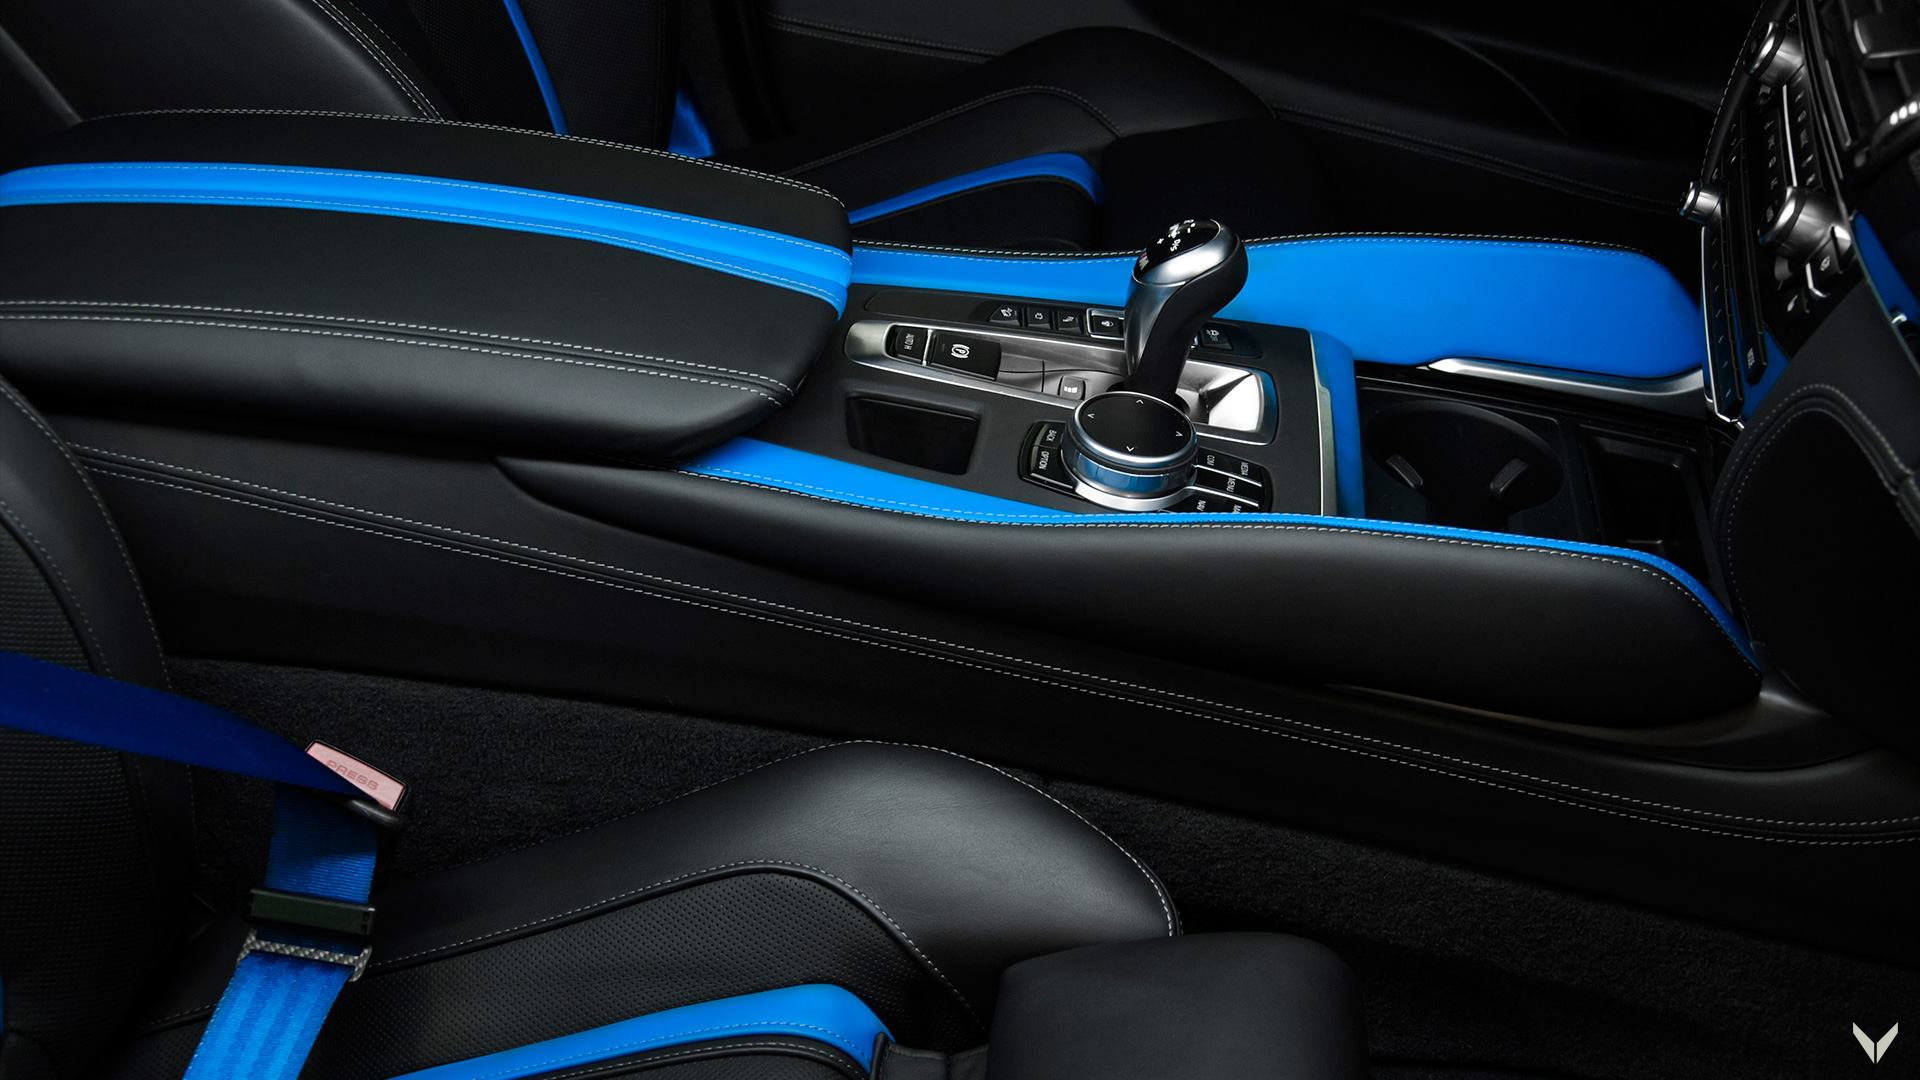 Vilner BMW X6 M F86 Luxus Interieur Tuning 9 Vilner BMW X6 M (F86) mit Luxus Interieur in blau/schwarz